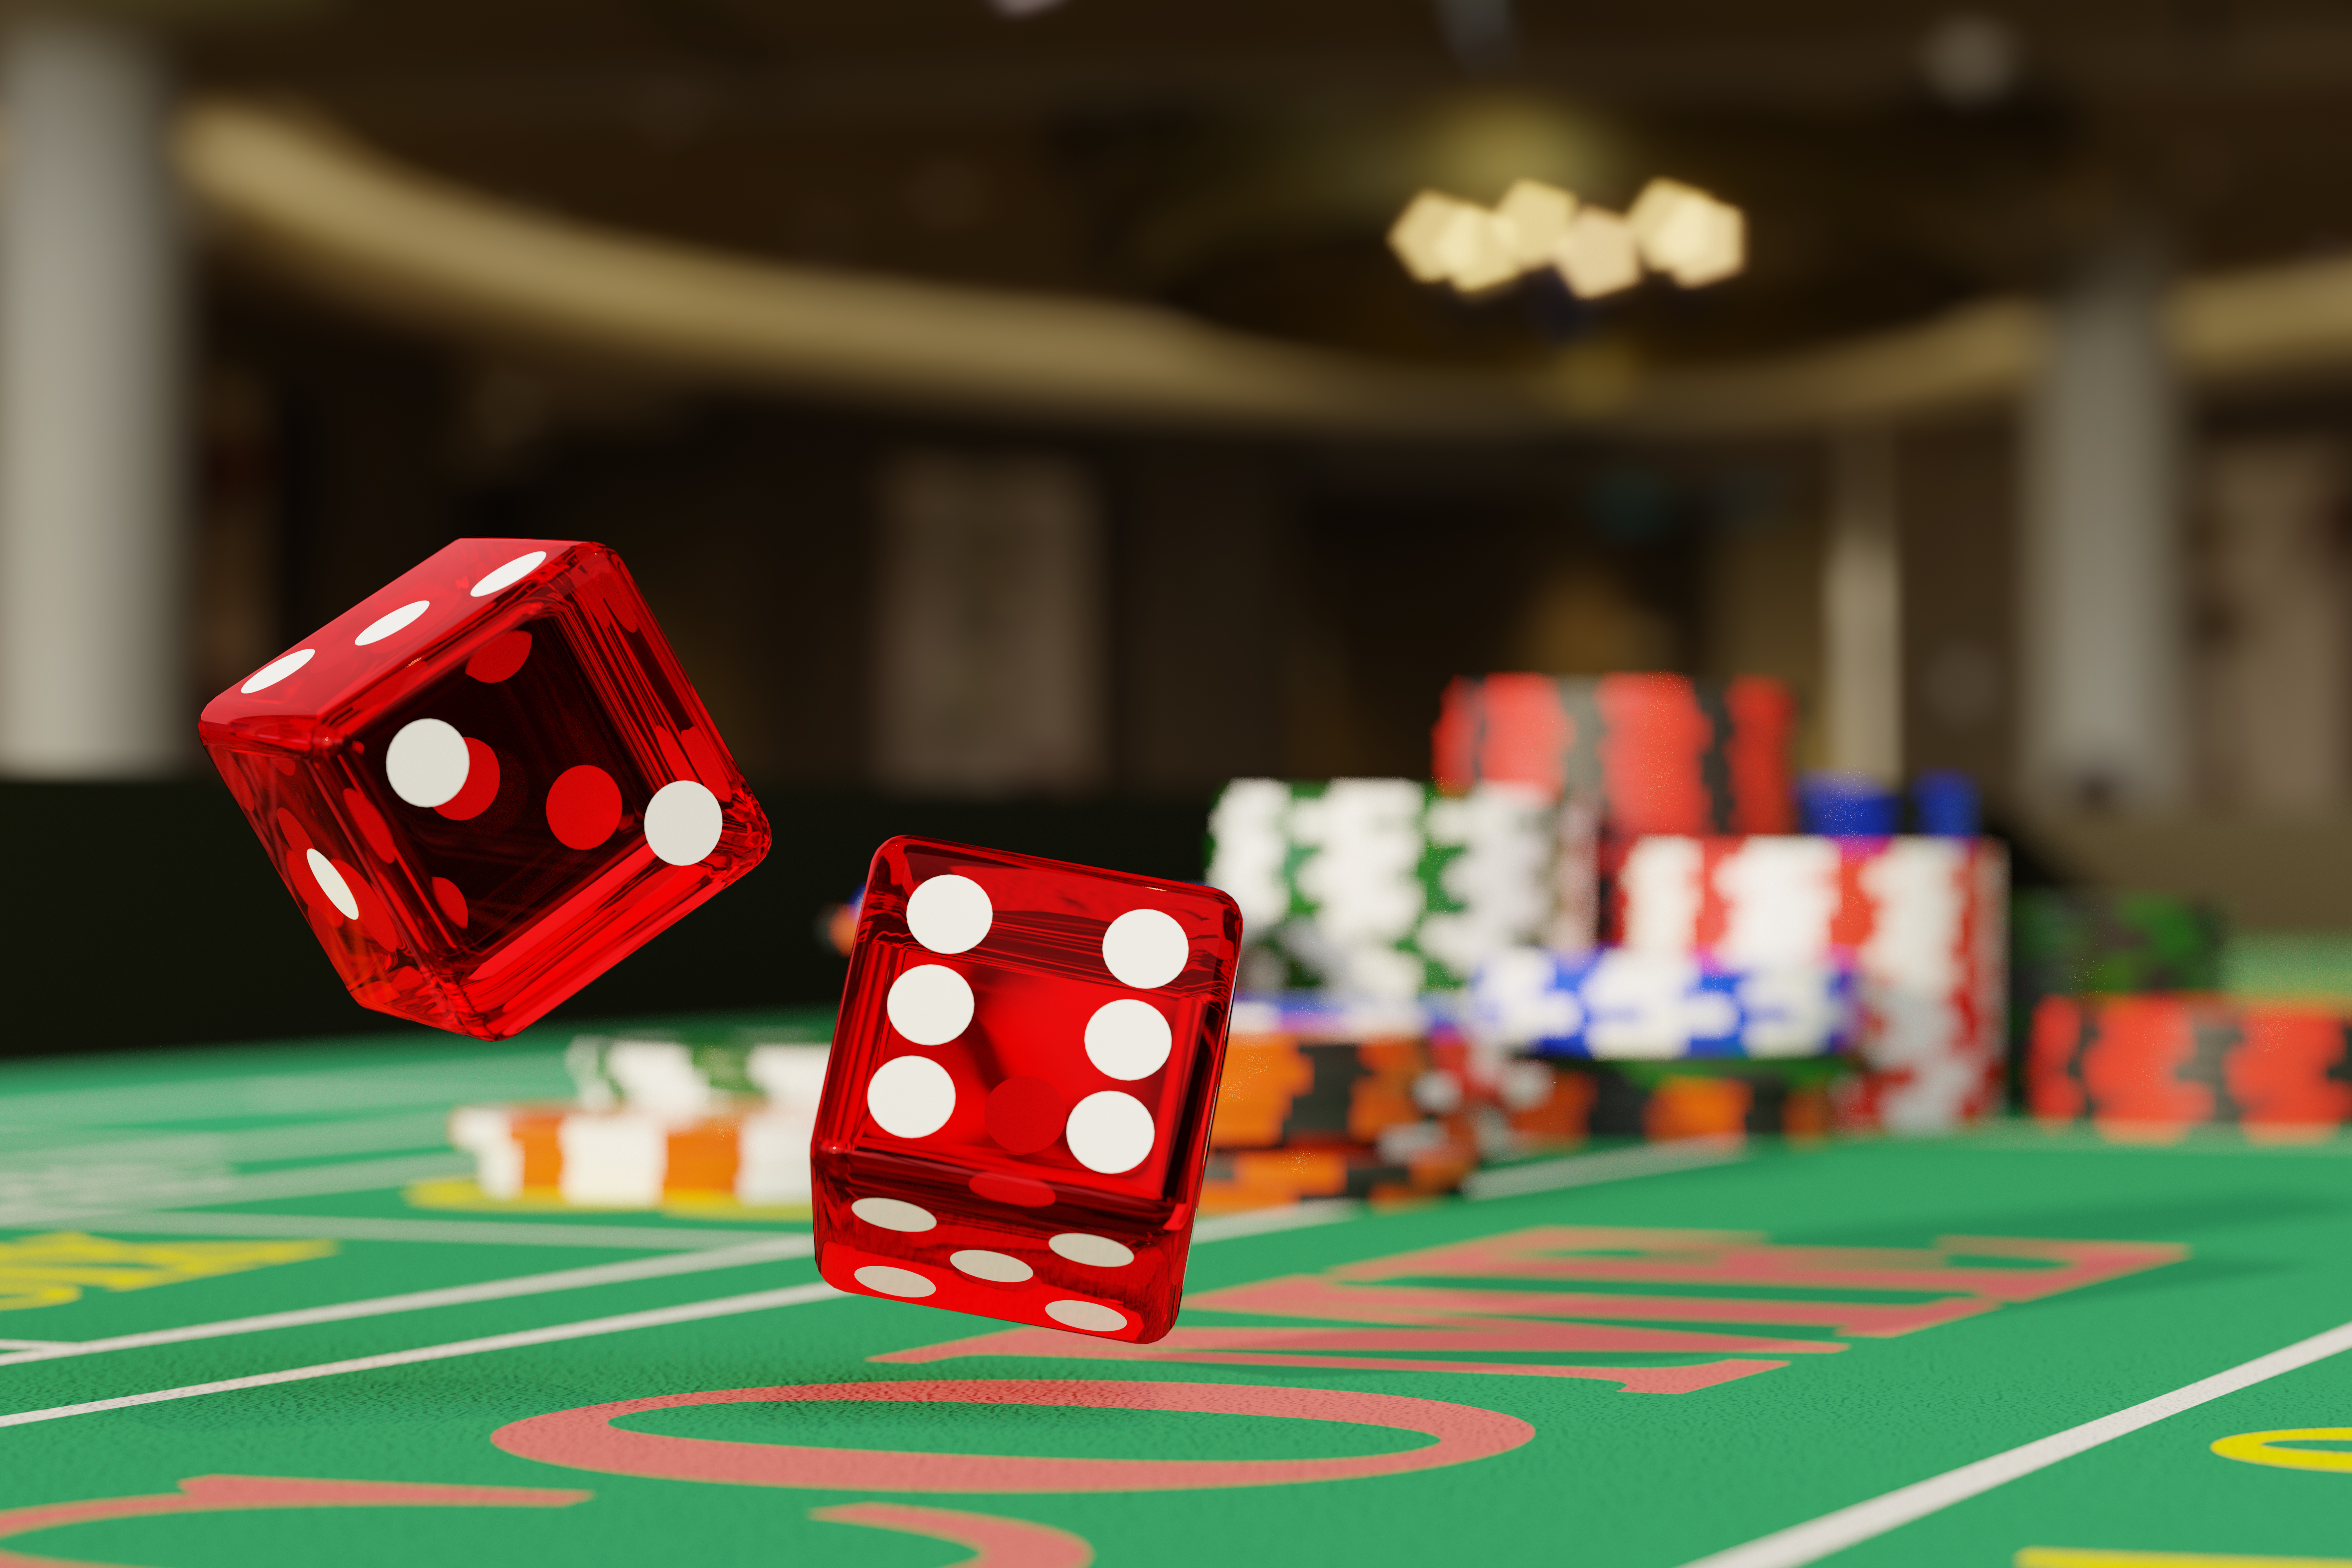 Will merkur casino online Ever Die?